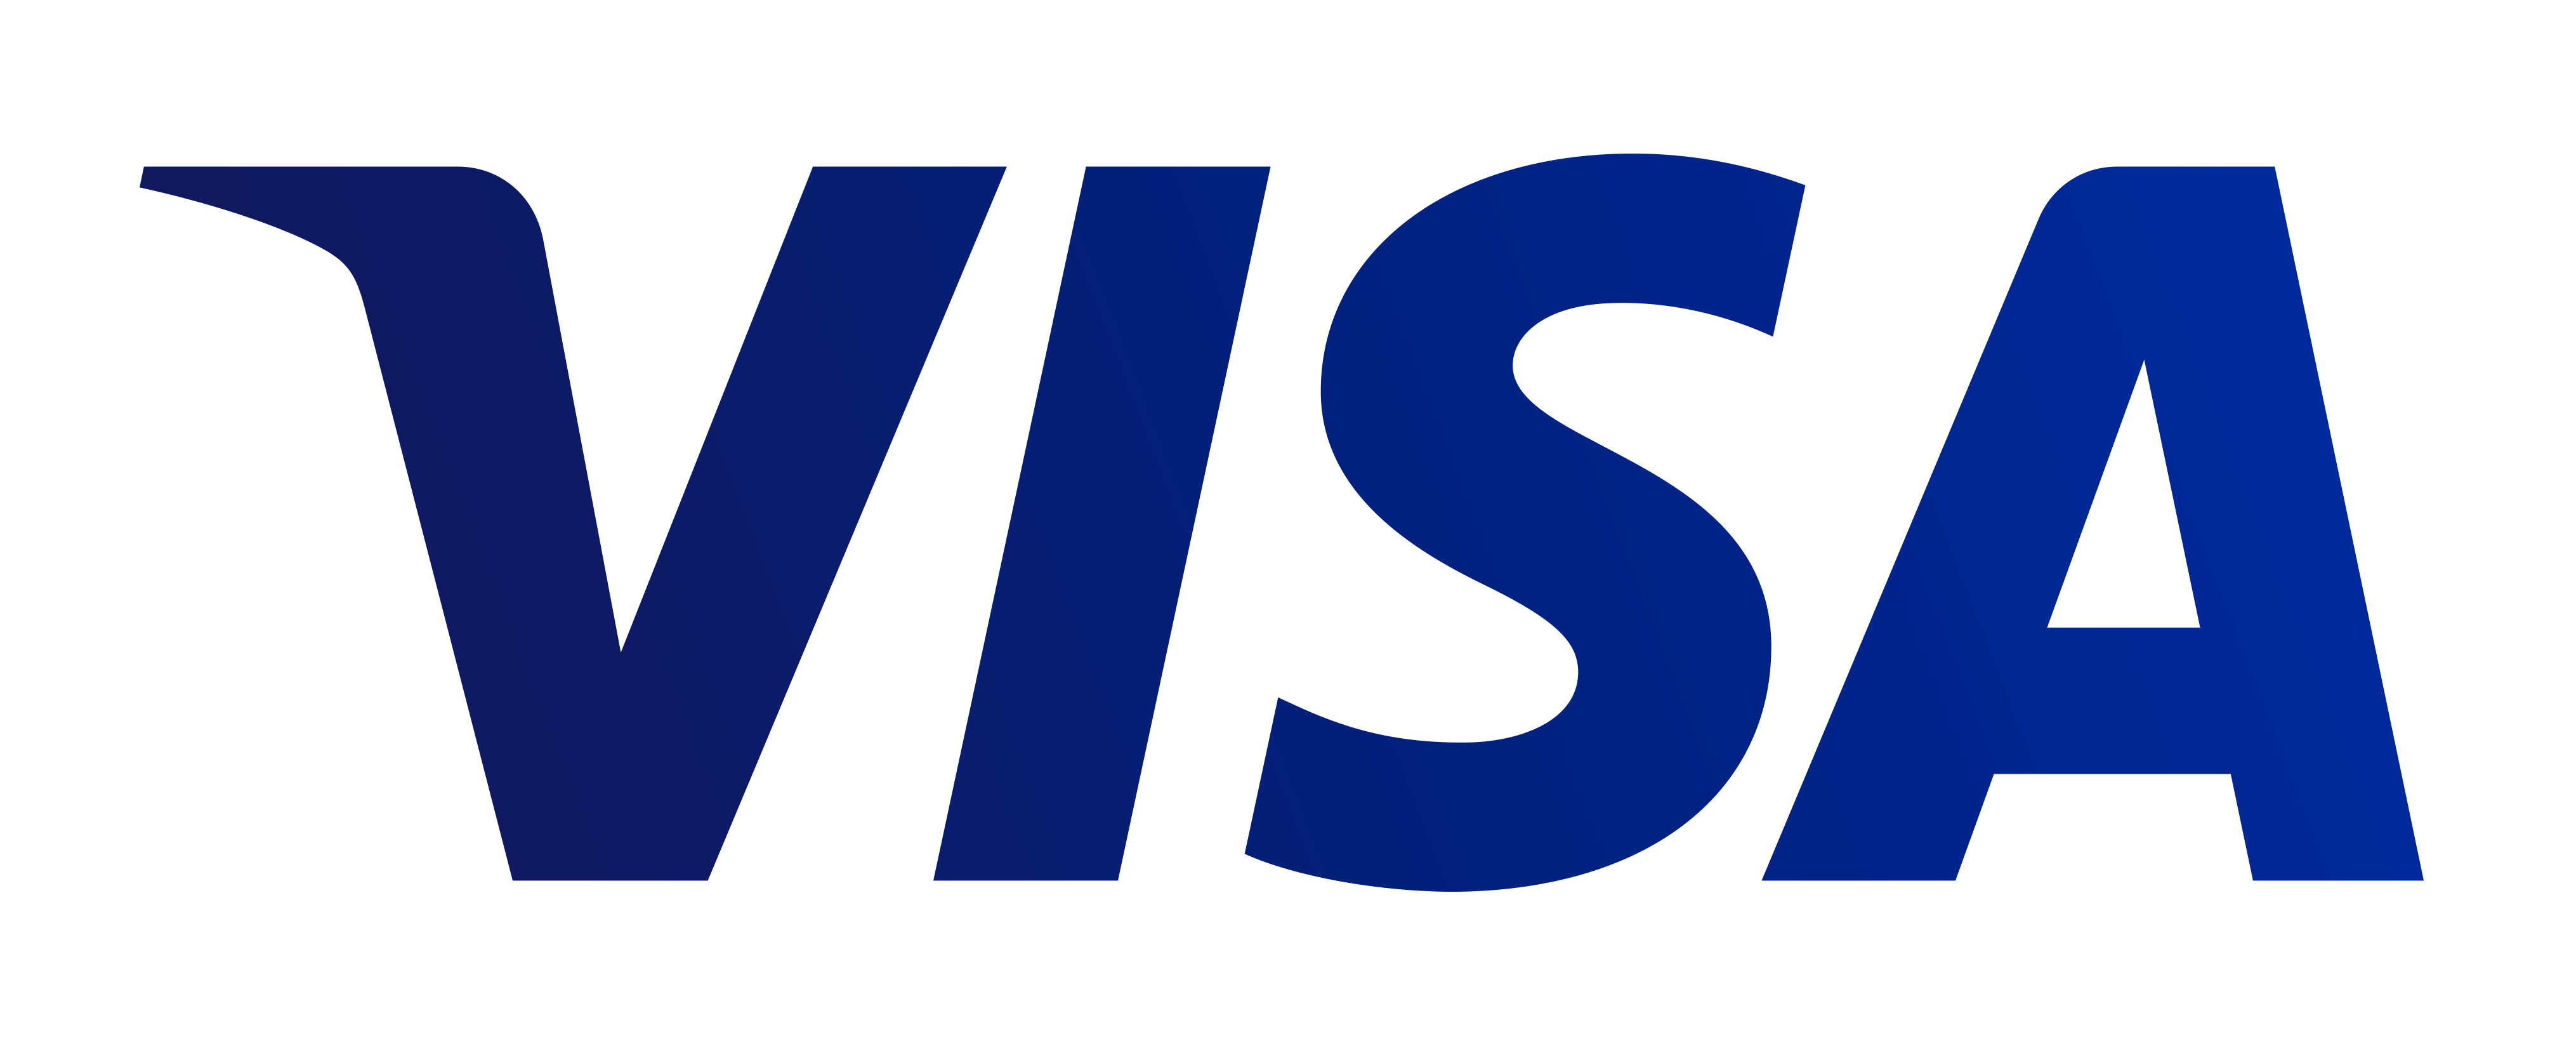 Logotipo de tarjeta de visa Archivo transparente